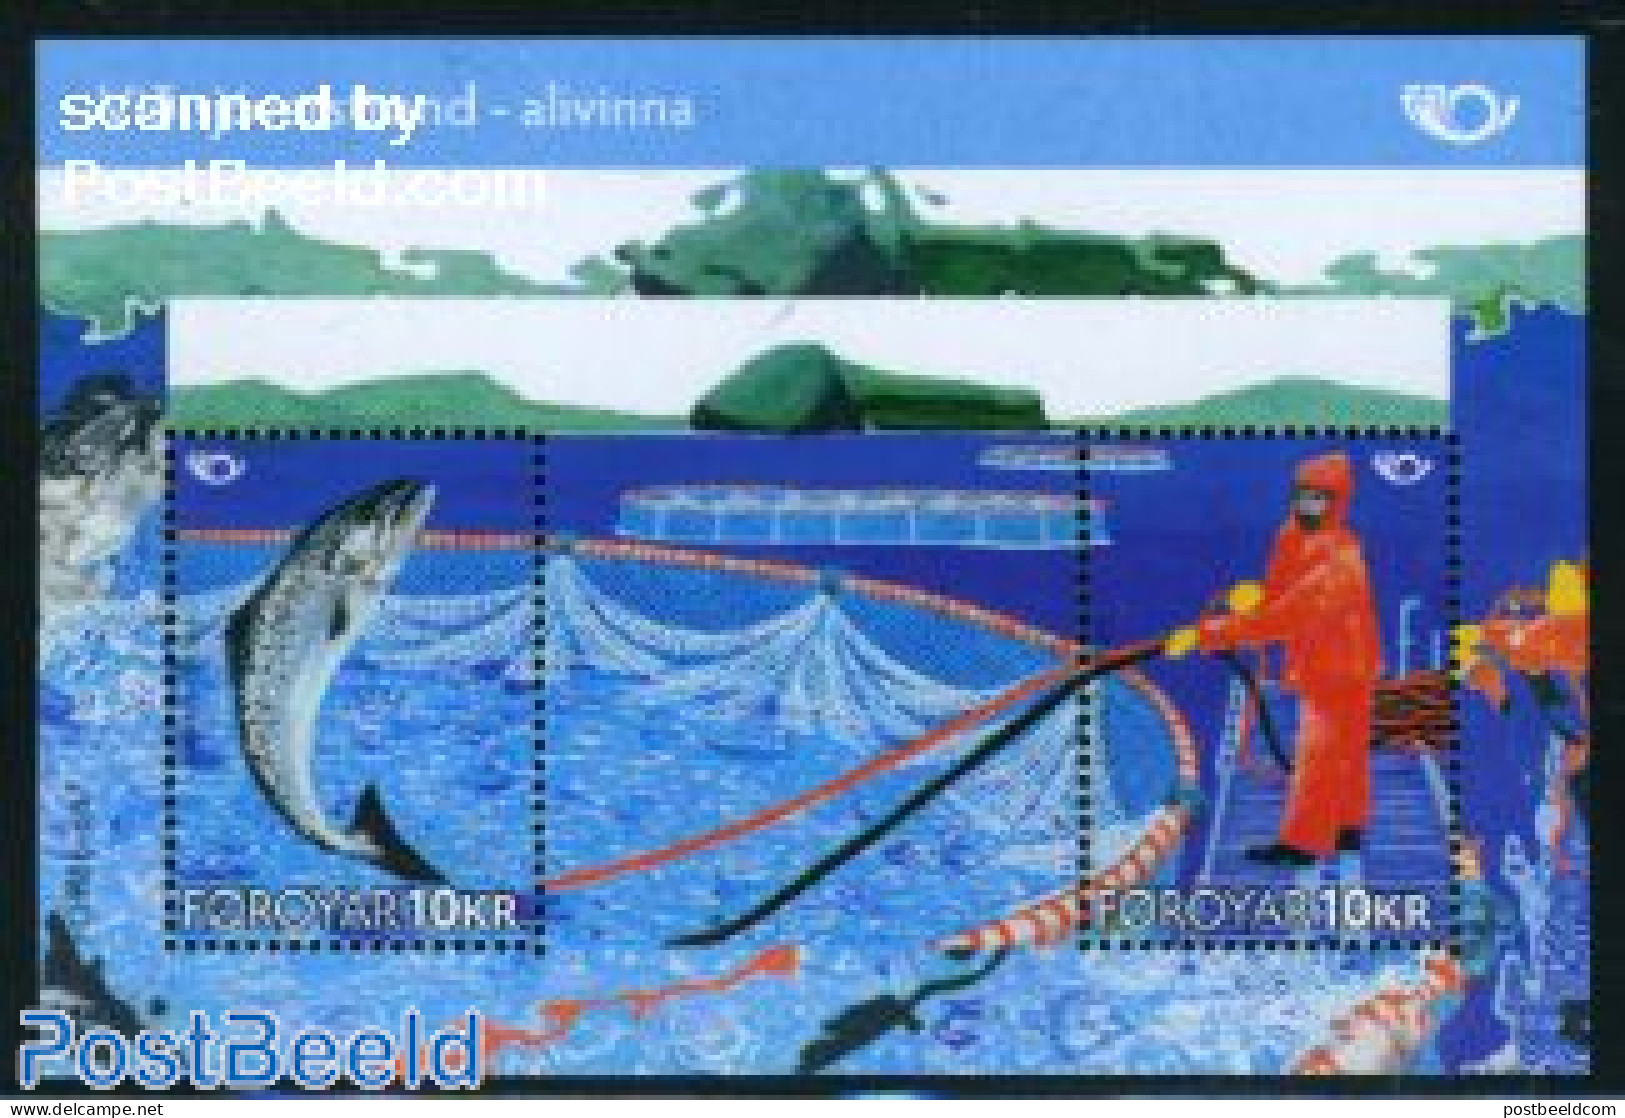 Faroe Islands 2010 Norden, Coastal Life S/s, Mint NH, History - Nature - Europa Hang-on Issues - Fish - Fishing - European Ideas